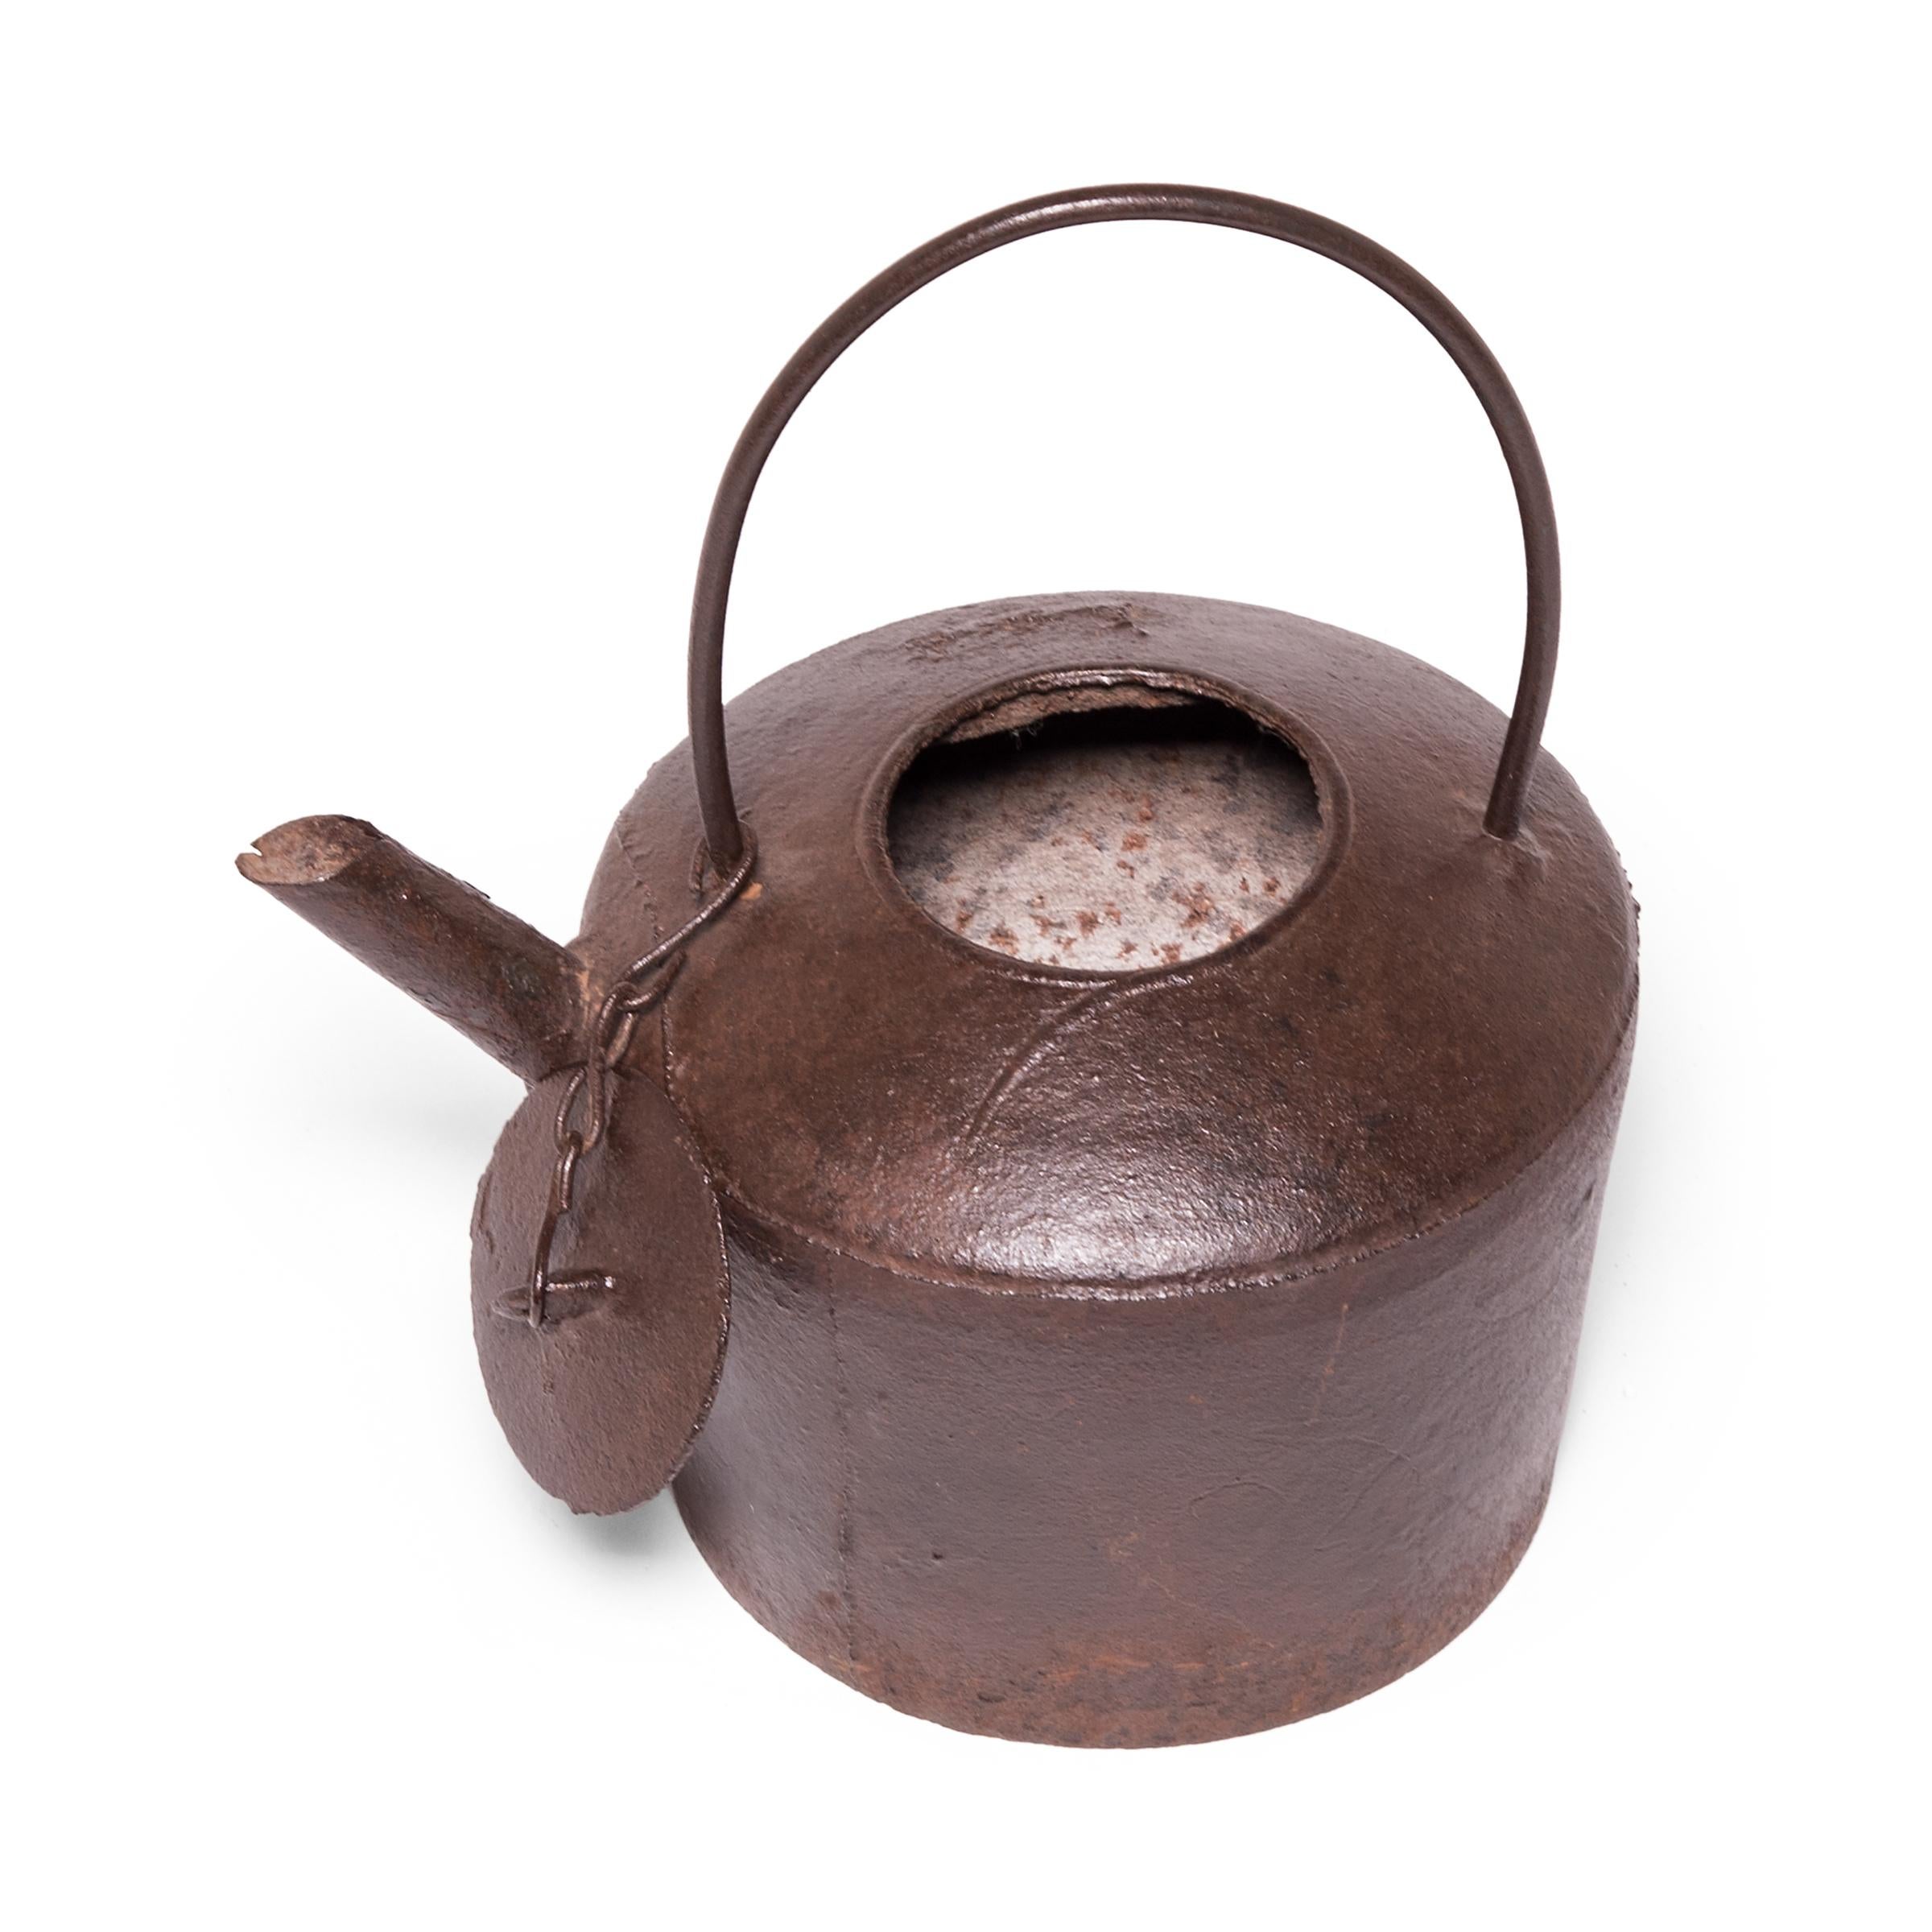 Rustic Cast Iron Tea Pot, c. 1900